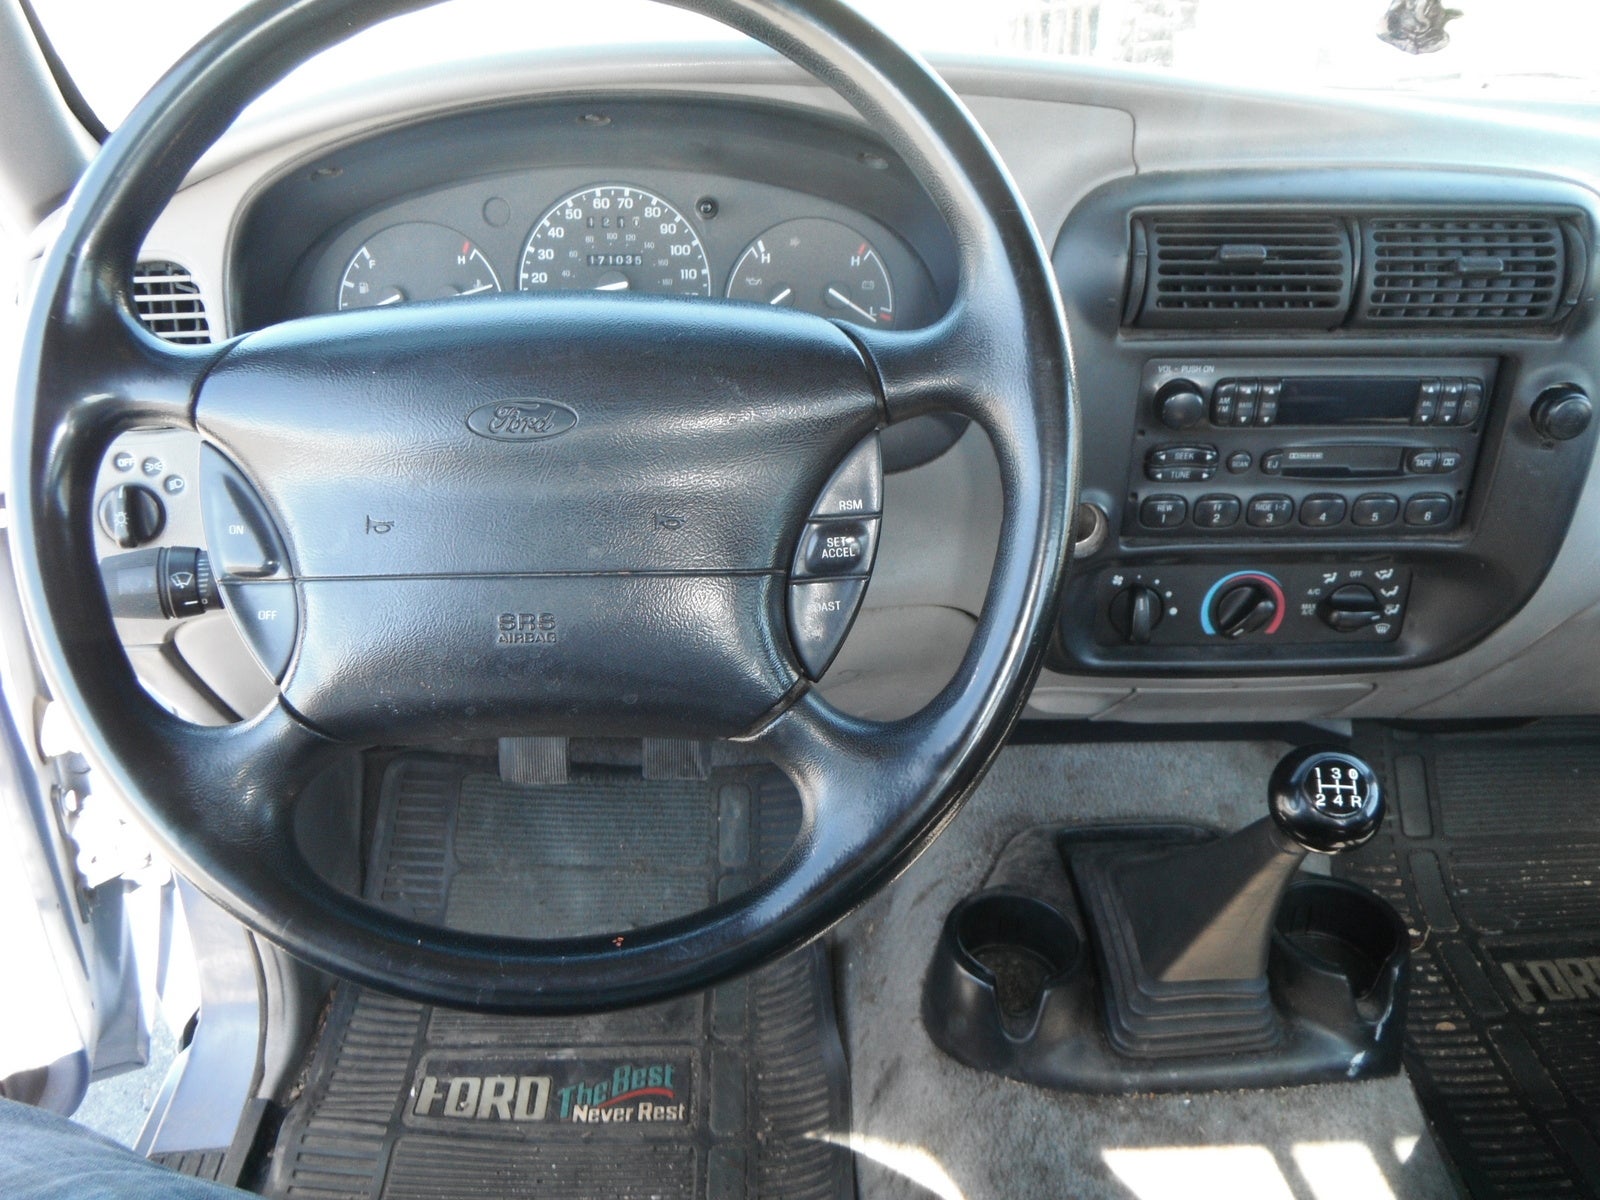 1997 Ford ranger interior trim #8